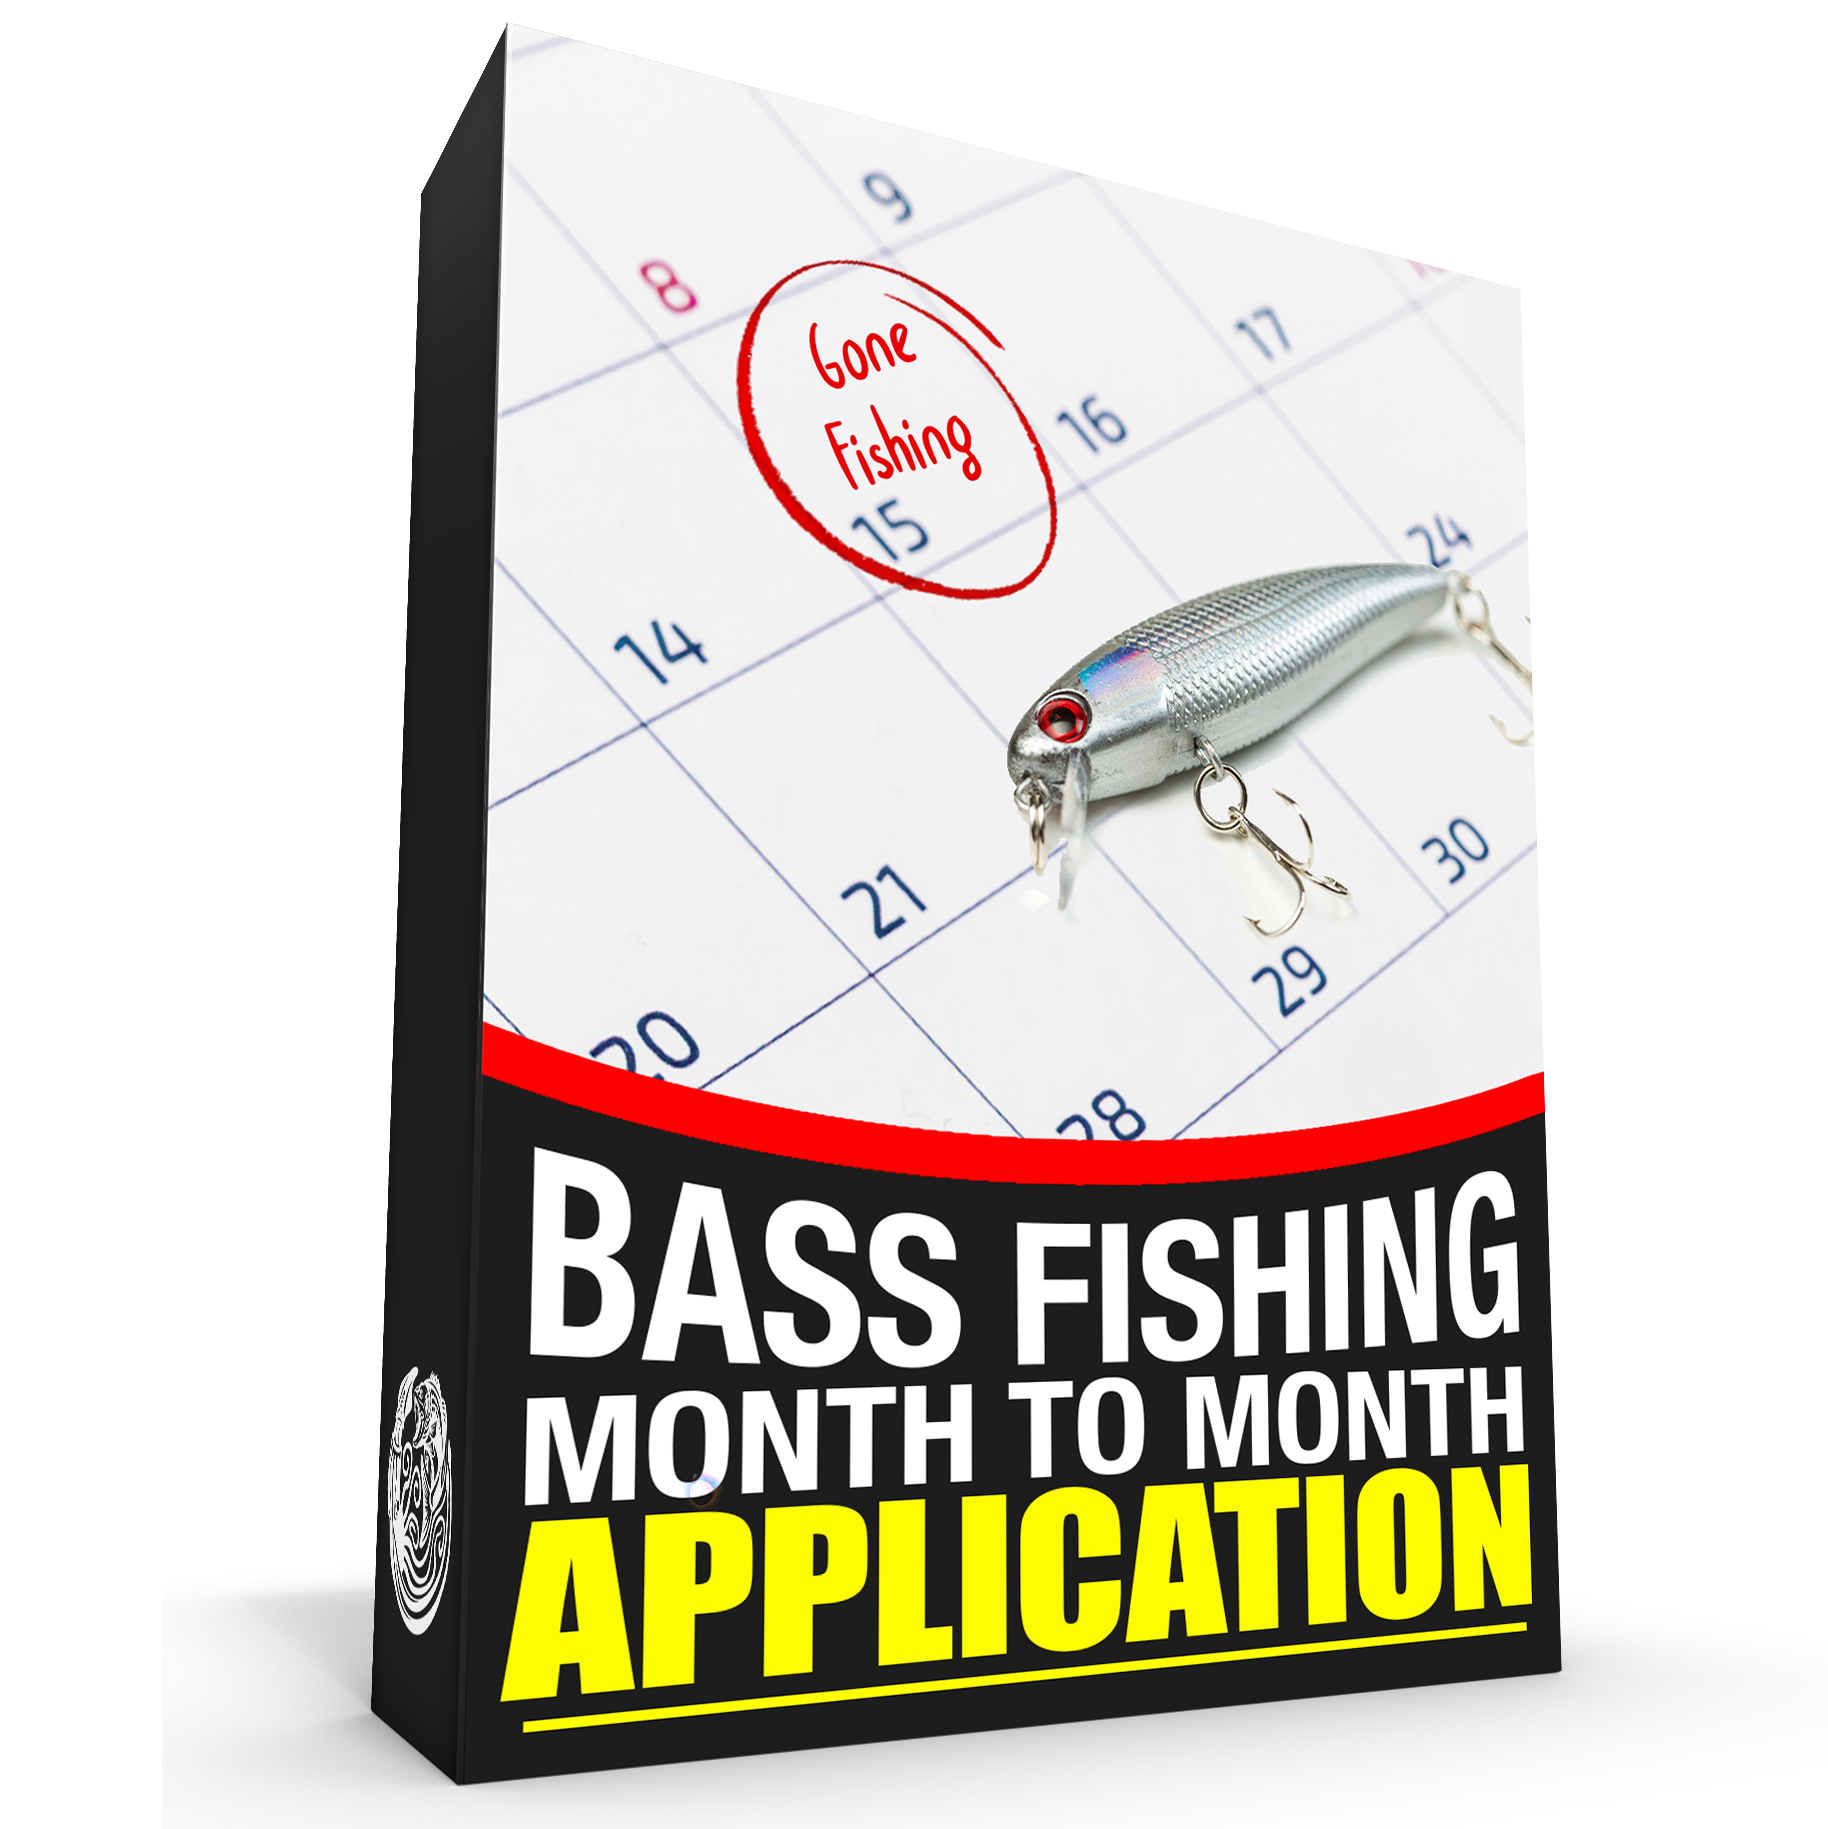 Simplifying finesse fishing, part 2 - Bassmaster